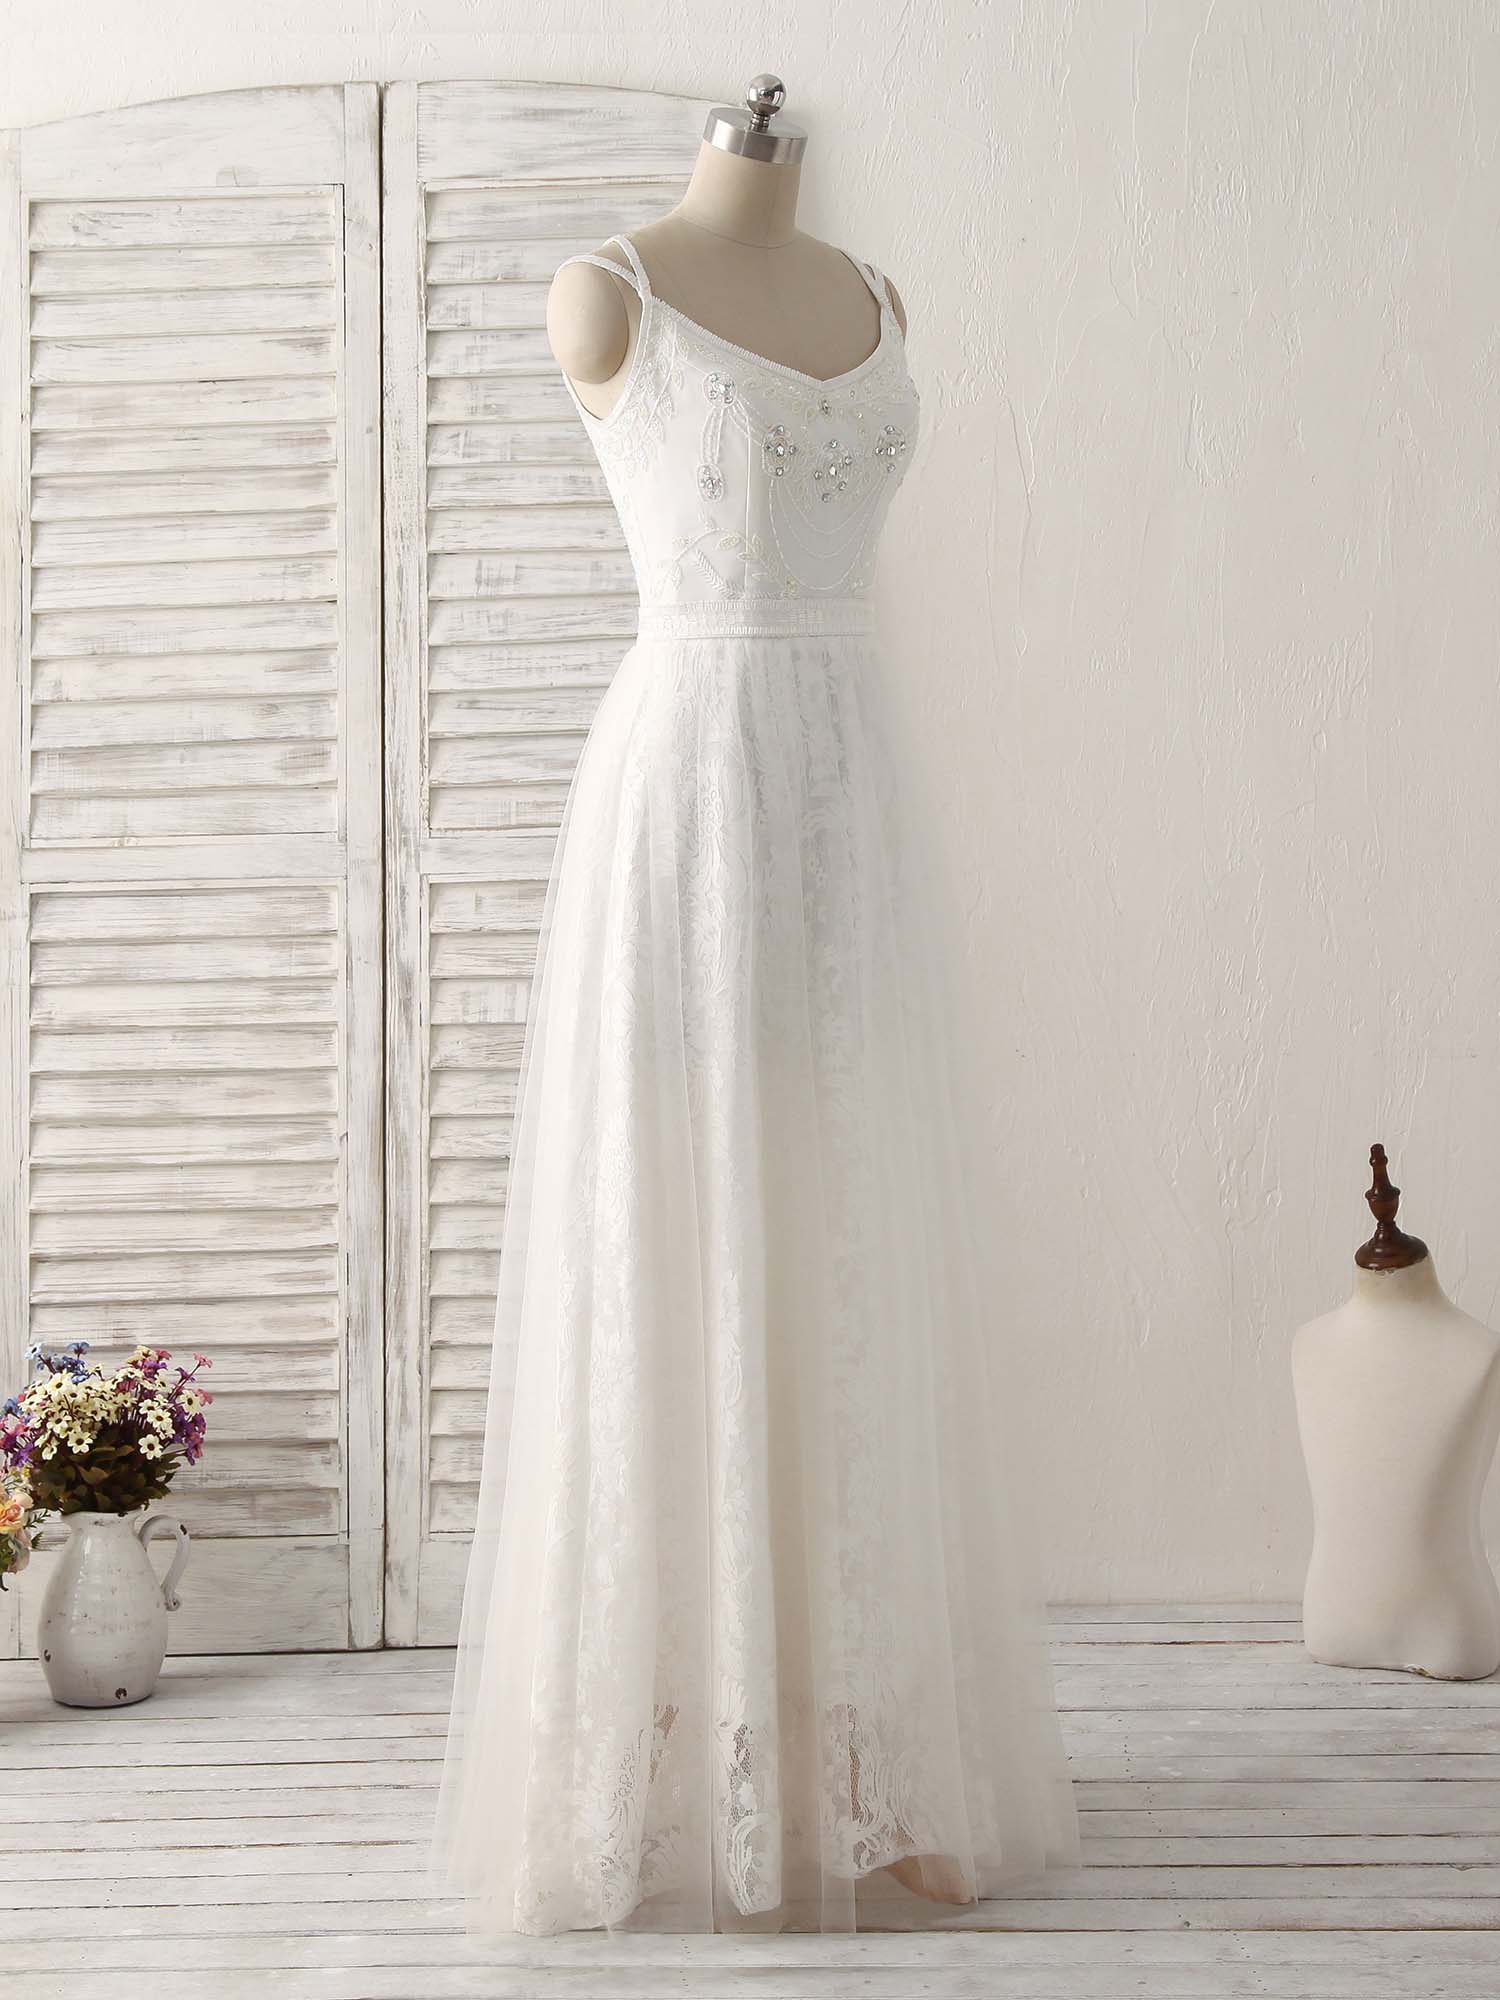 Homecomming Dresses Black, White V Neck Tulle Lace Long Prom Dress White Evening Dress